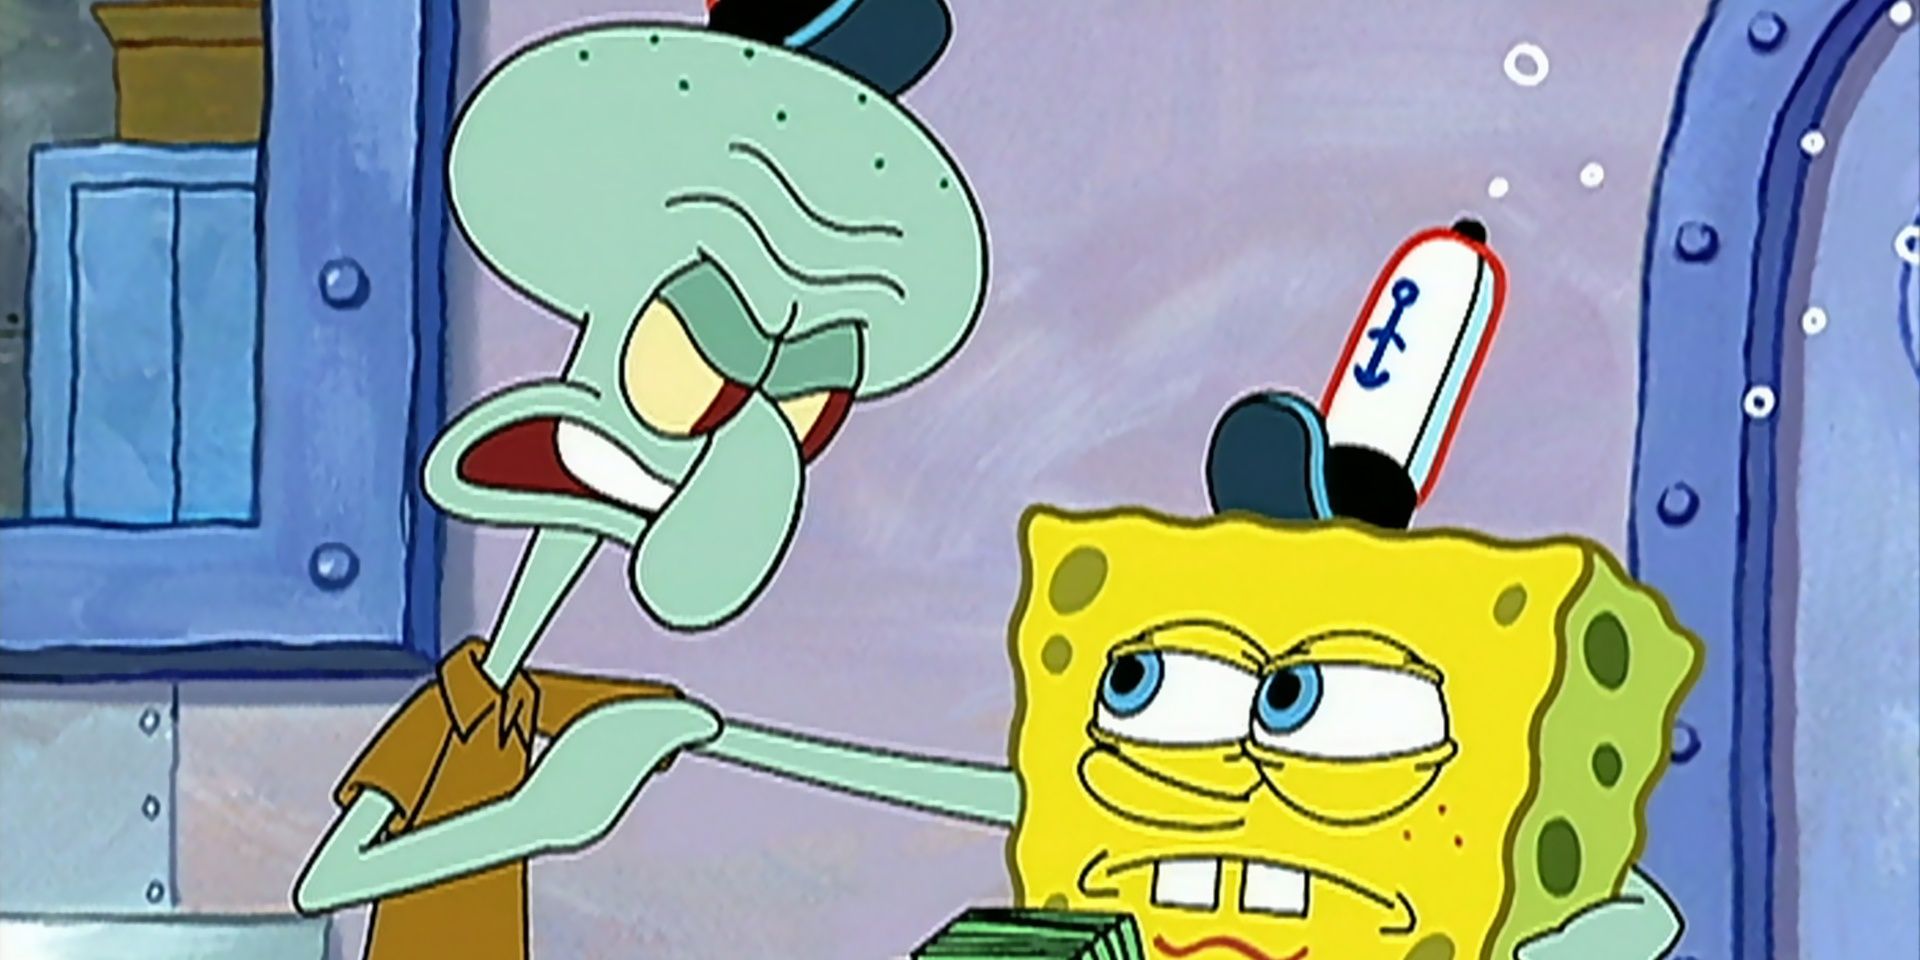 Squidward telling SpongeBob to go on strike with him